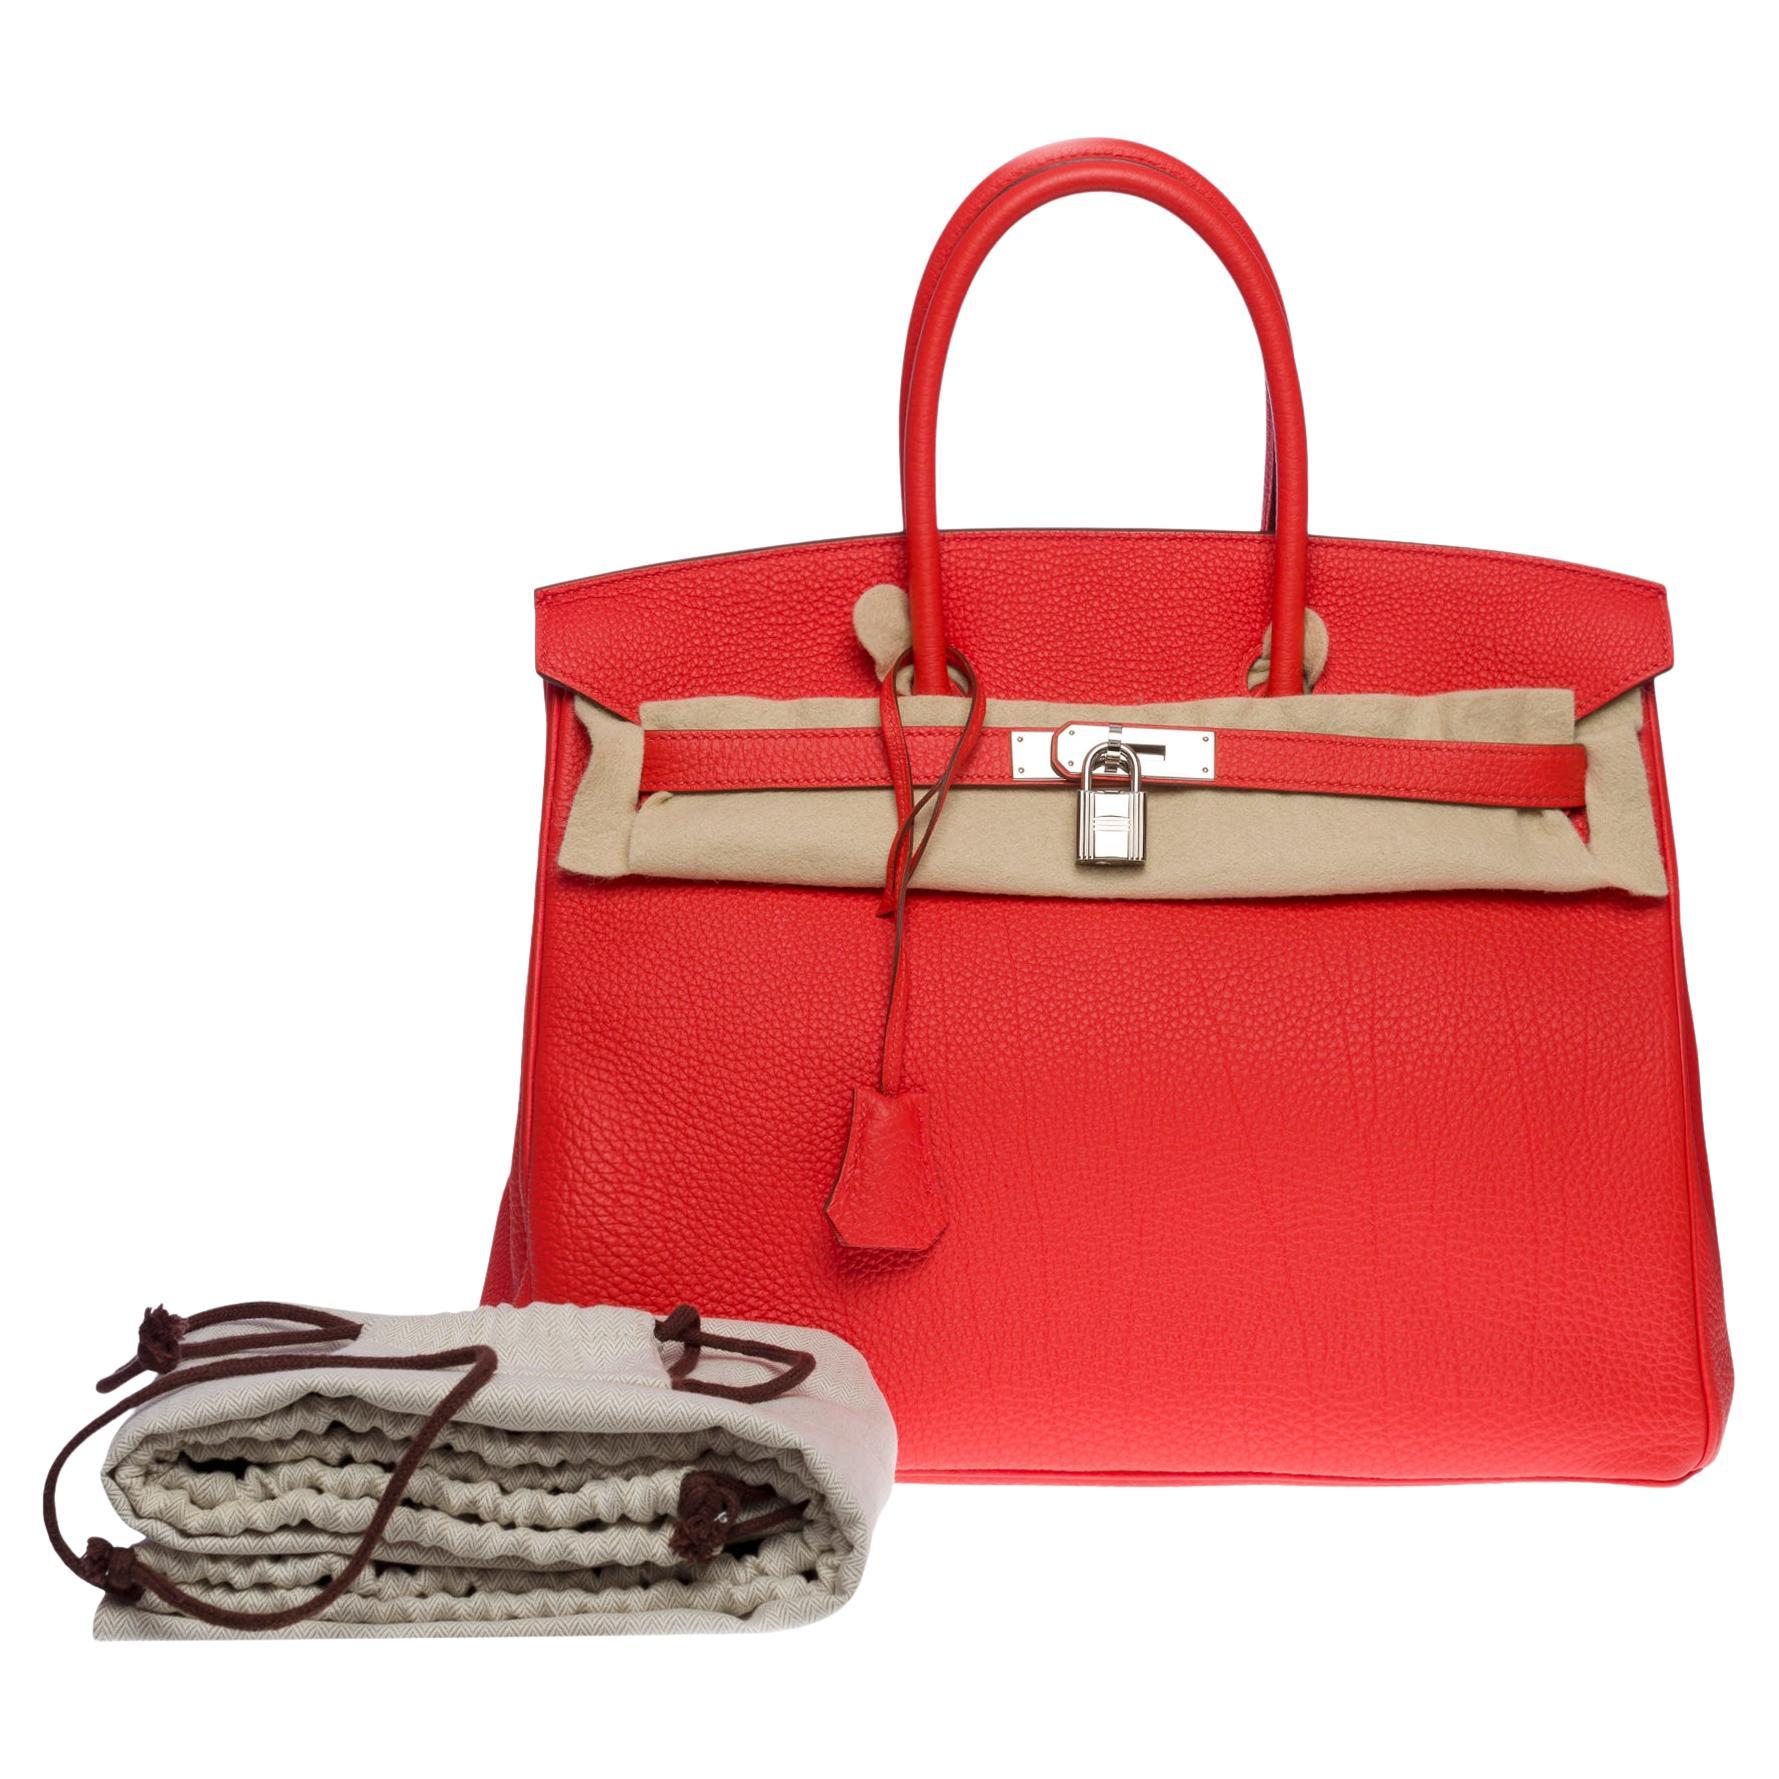 Almost New Hermès Birkin 35 handbag in Orange Poppy Togo leather, SHW For Sale